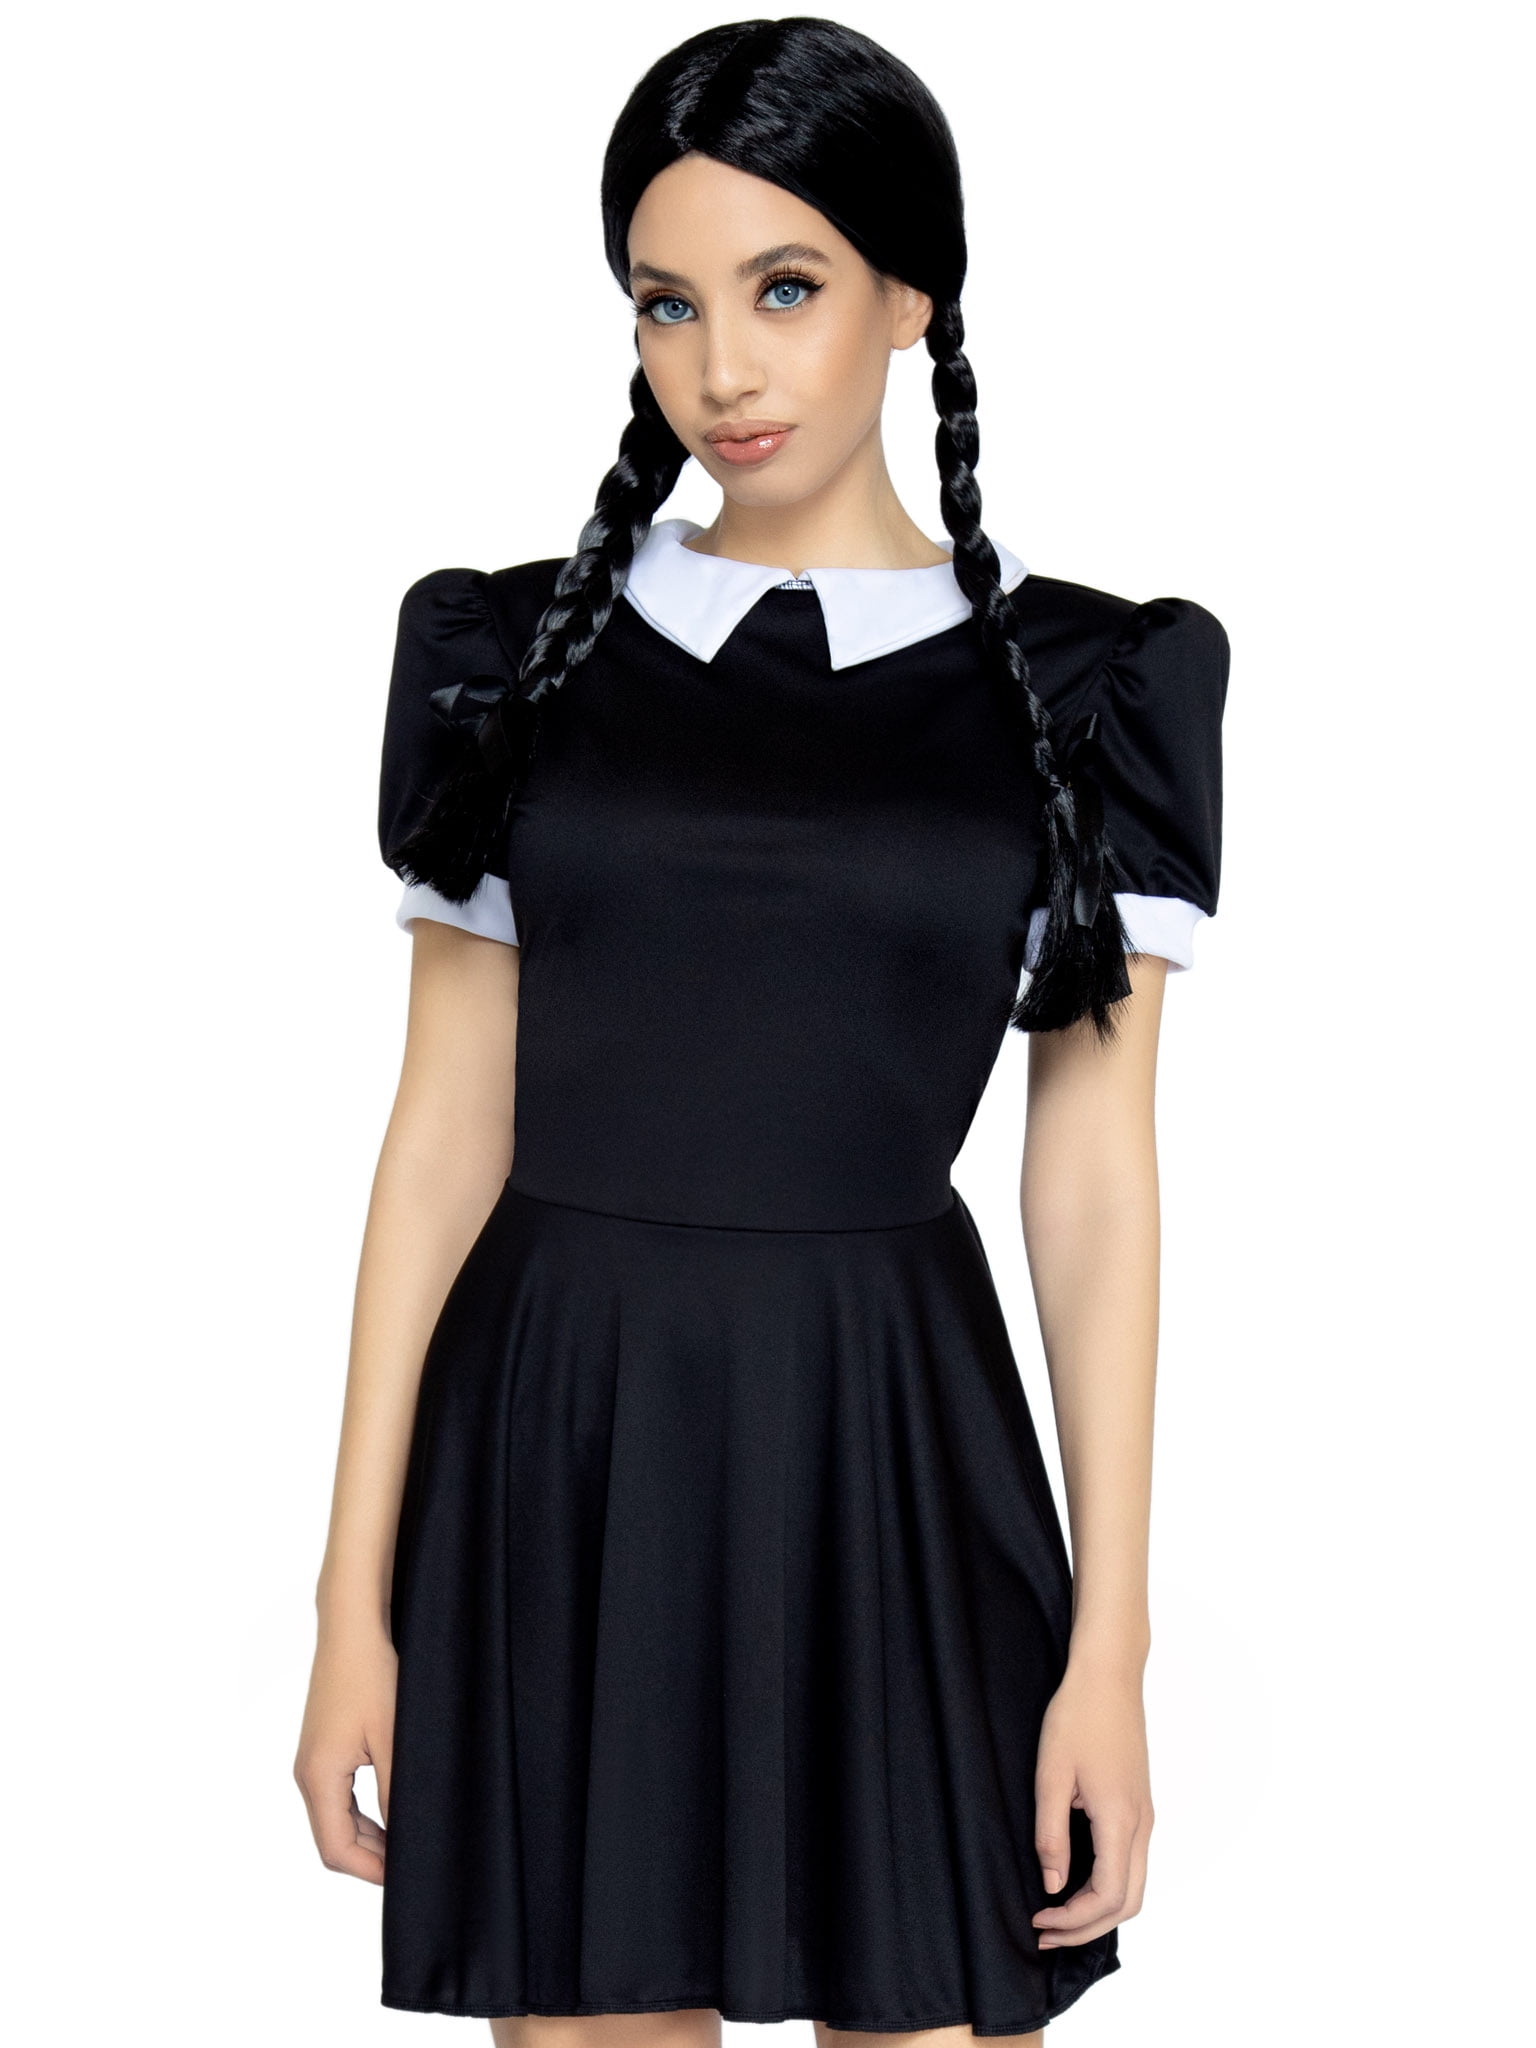 Wonderland Women's Female Adult Dark Gothic Family Darling Halloween Costume Black